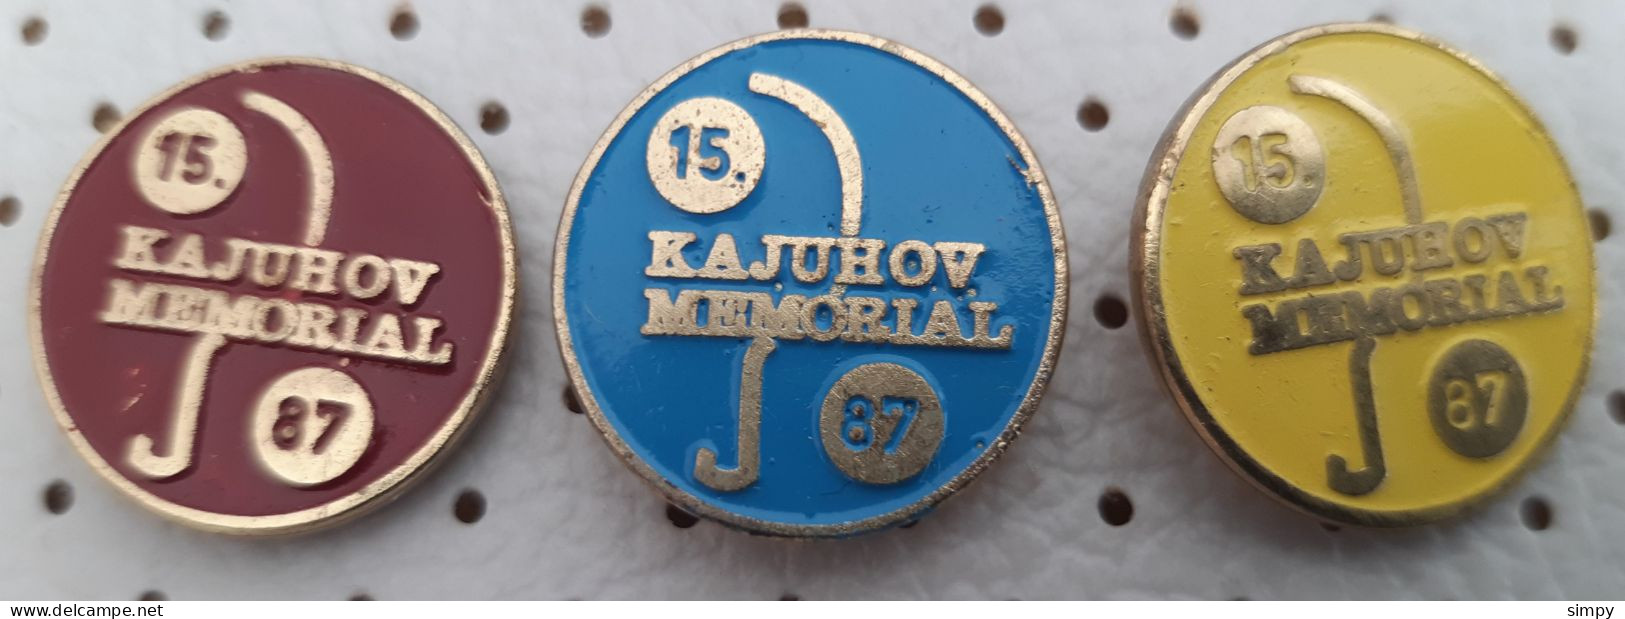 Table Tennis Tournament 15. Kajuhov Memorial  1987 Slovenia Pins Badge - Table Tennis